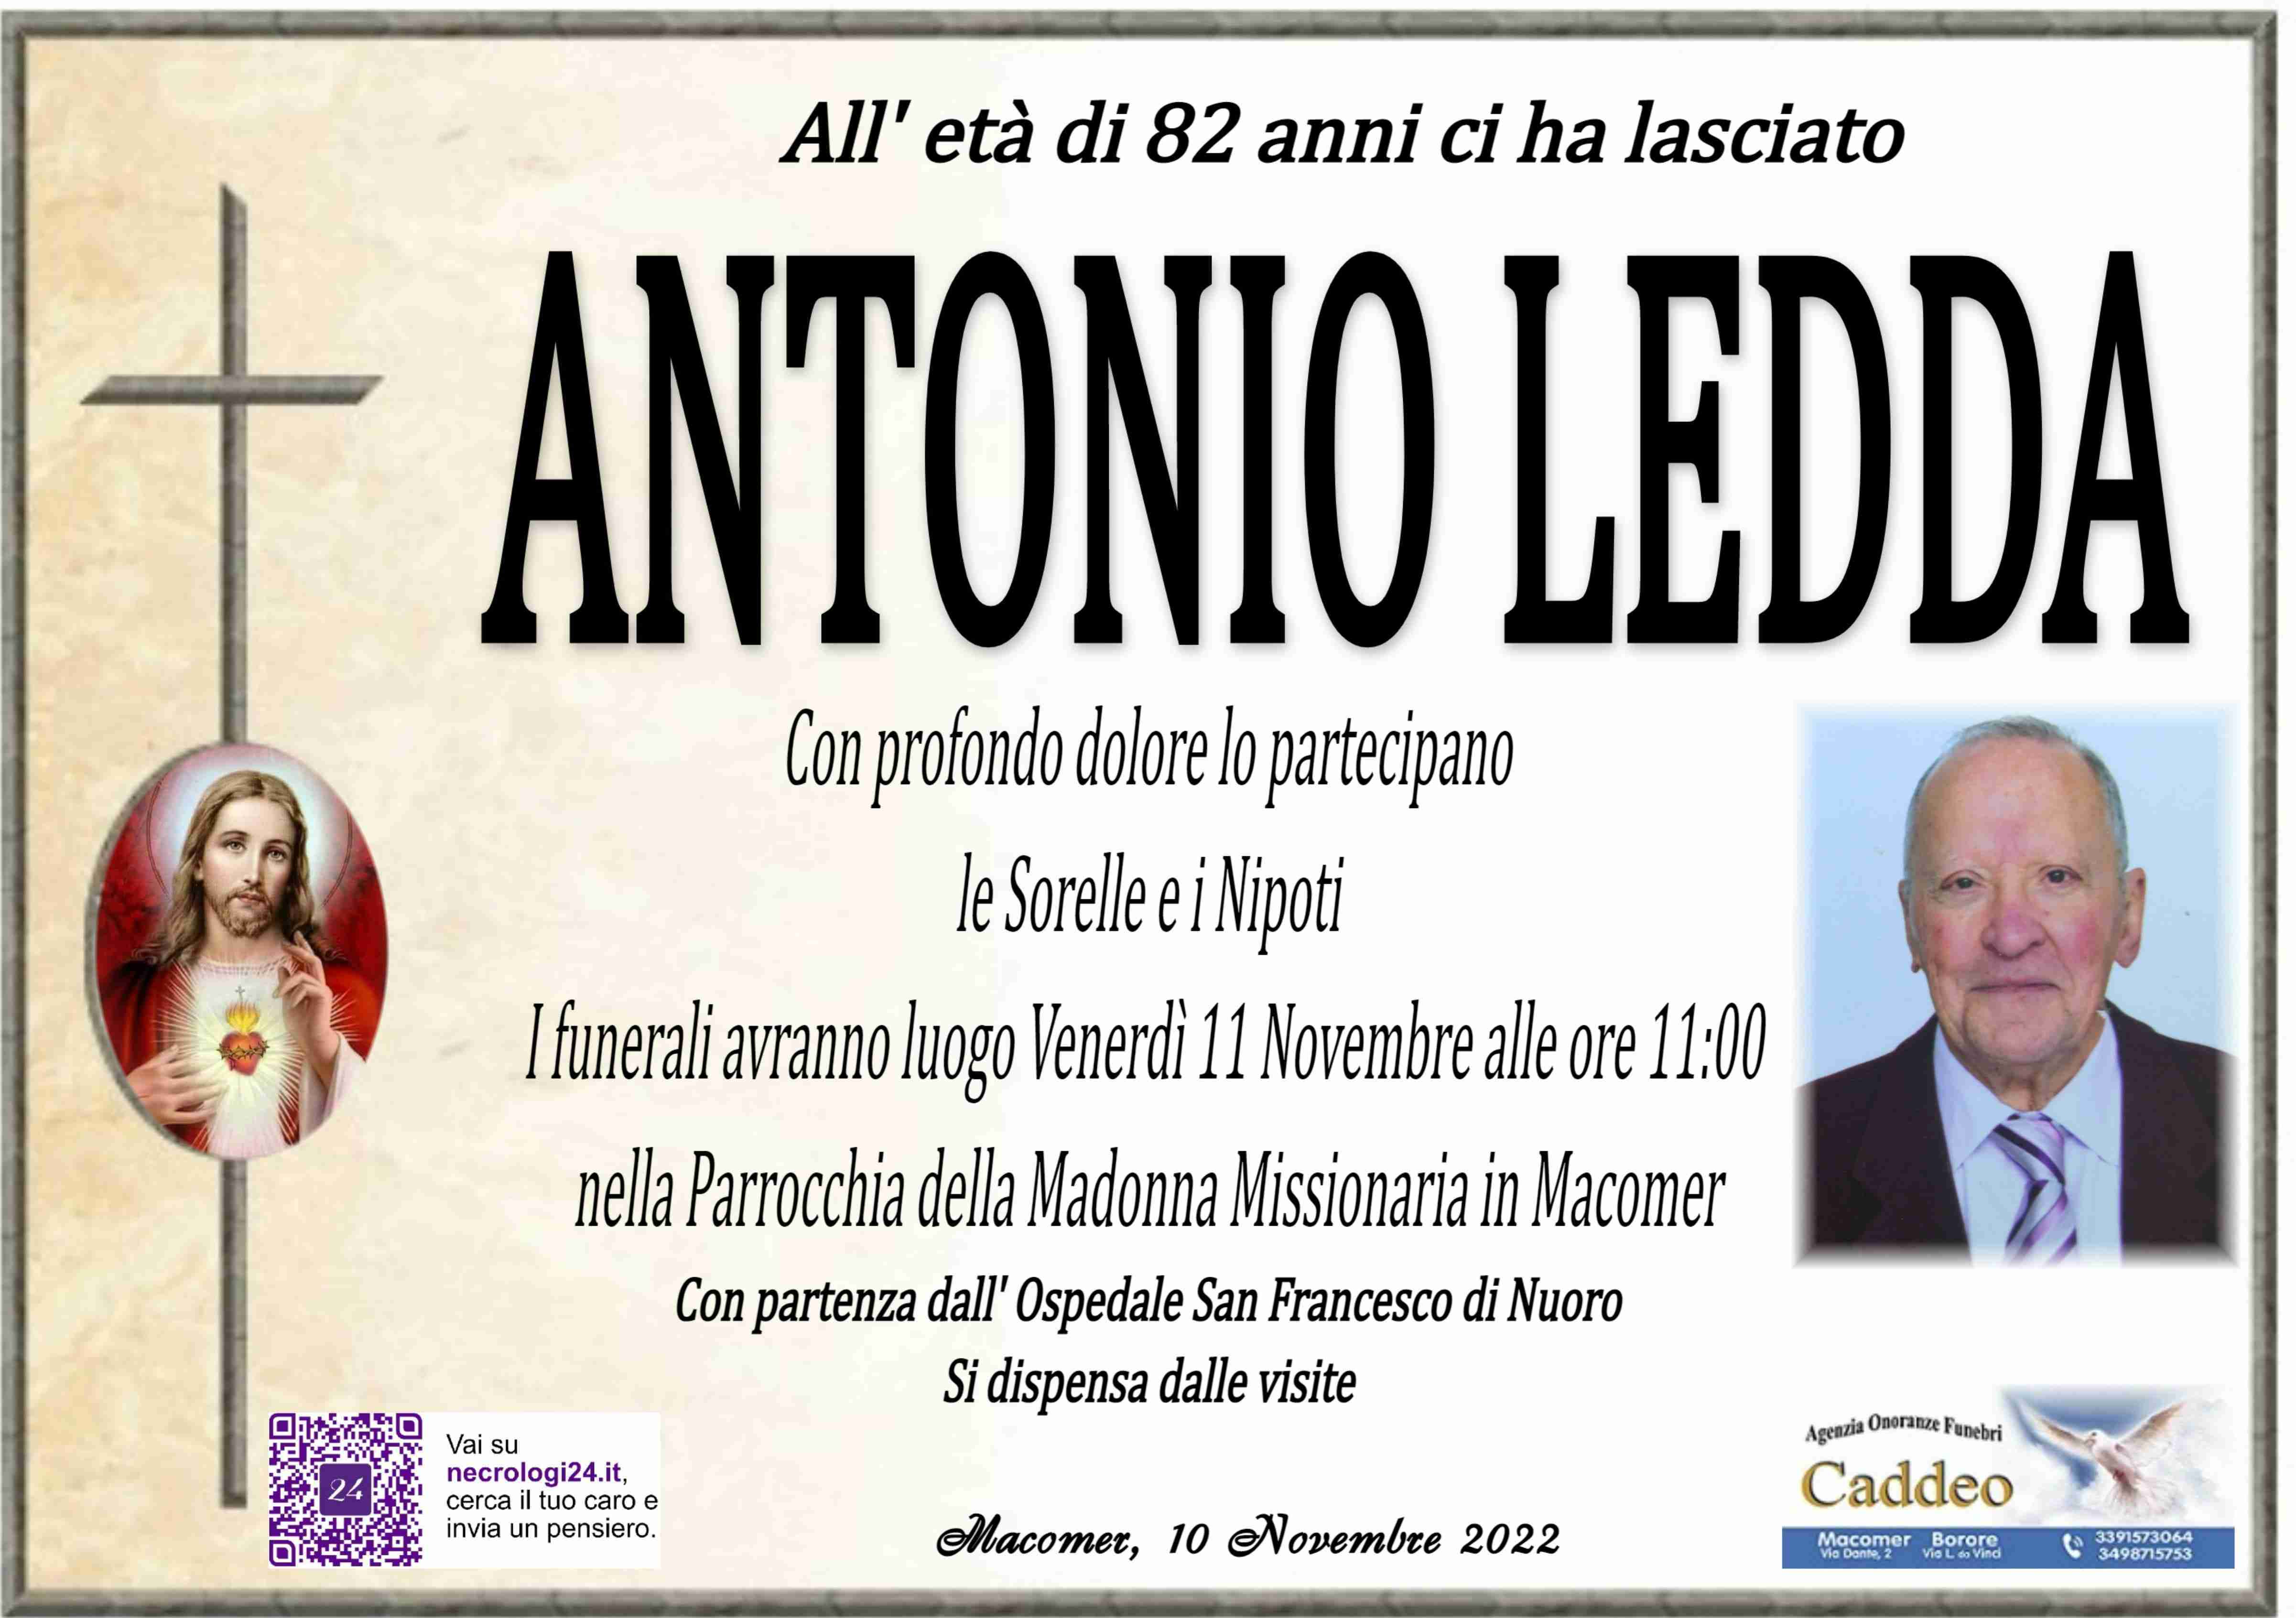 Antonio Ledda